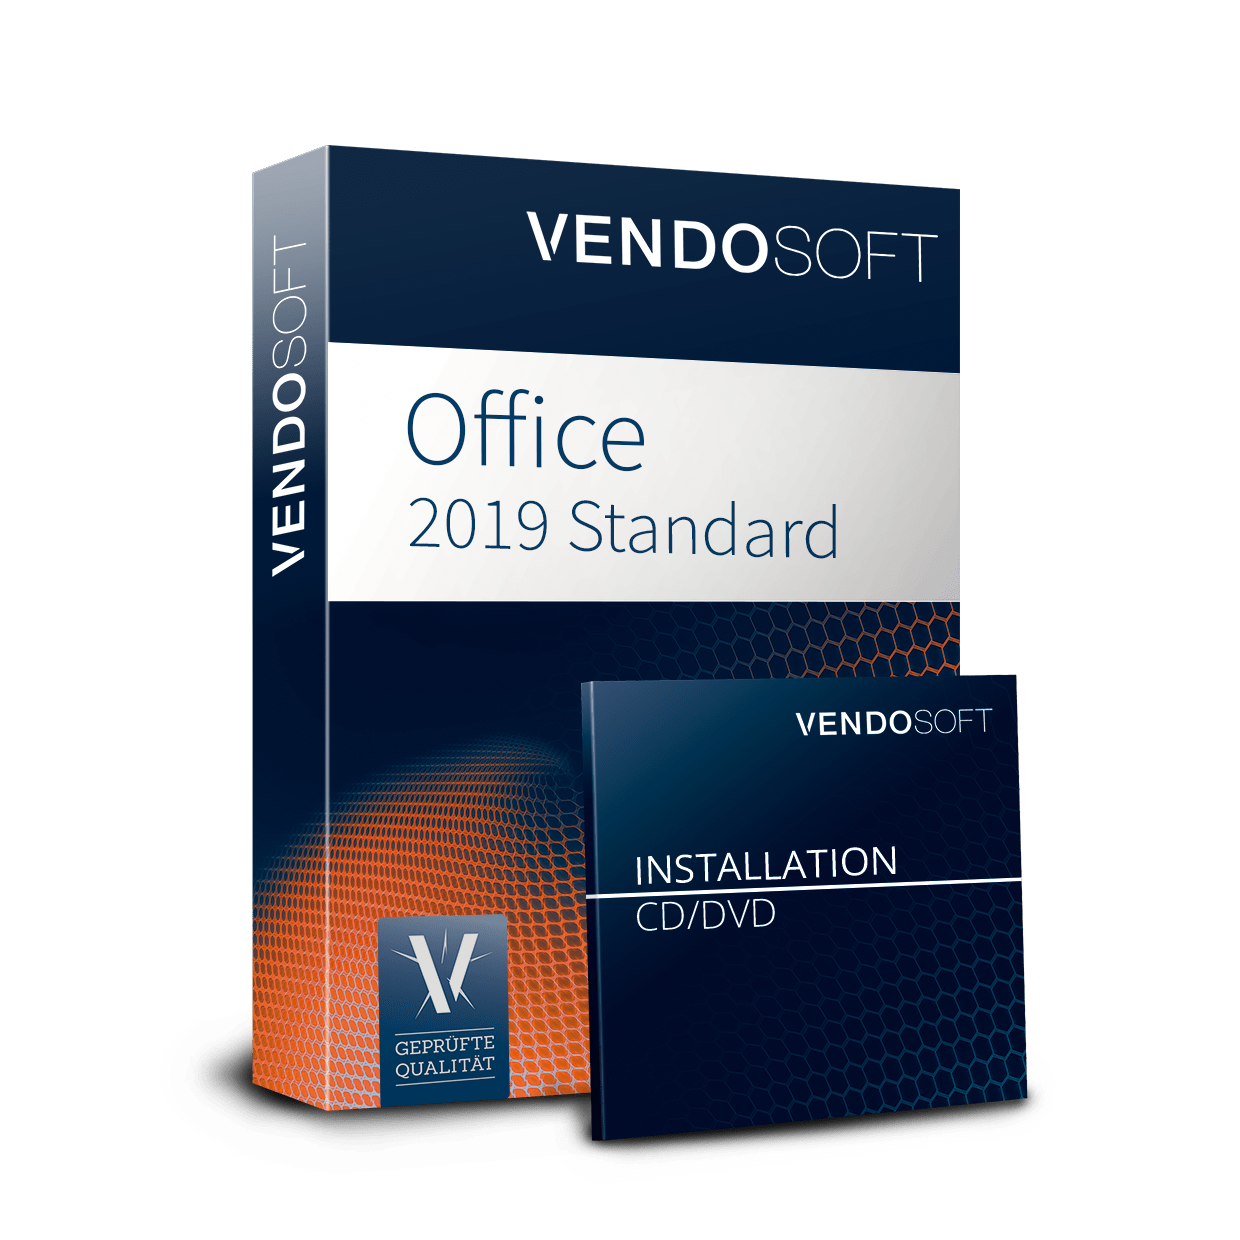 microsoft office 2019 standard price